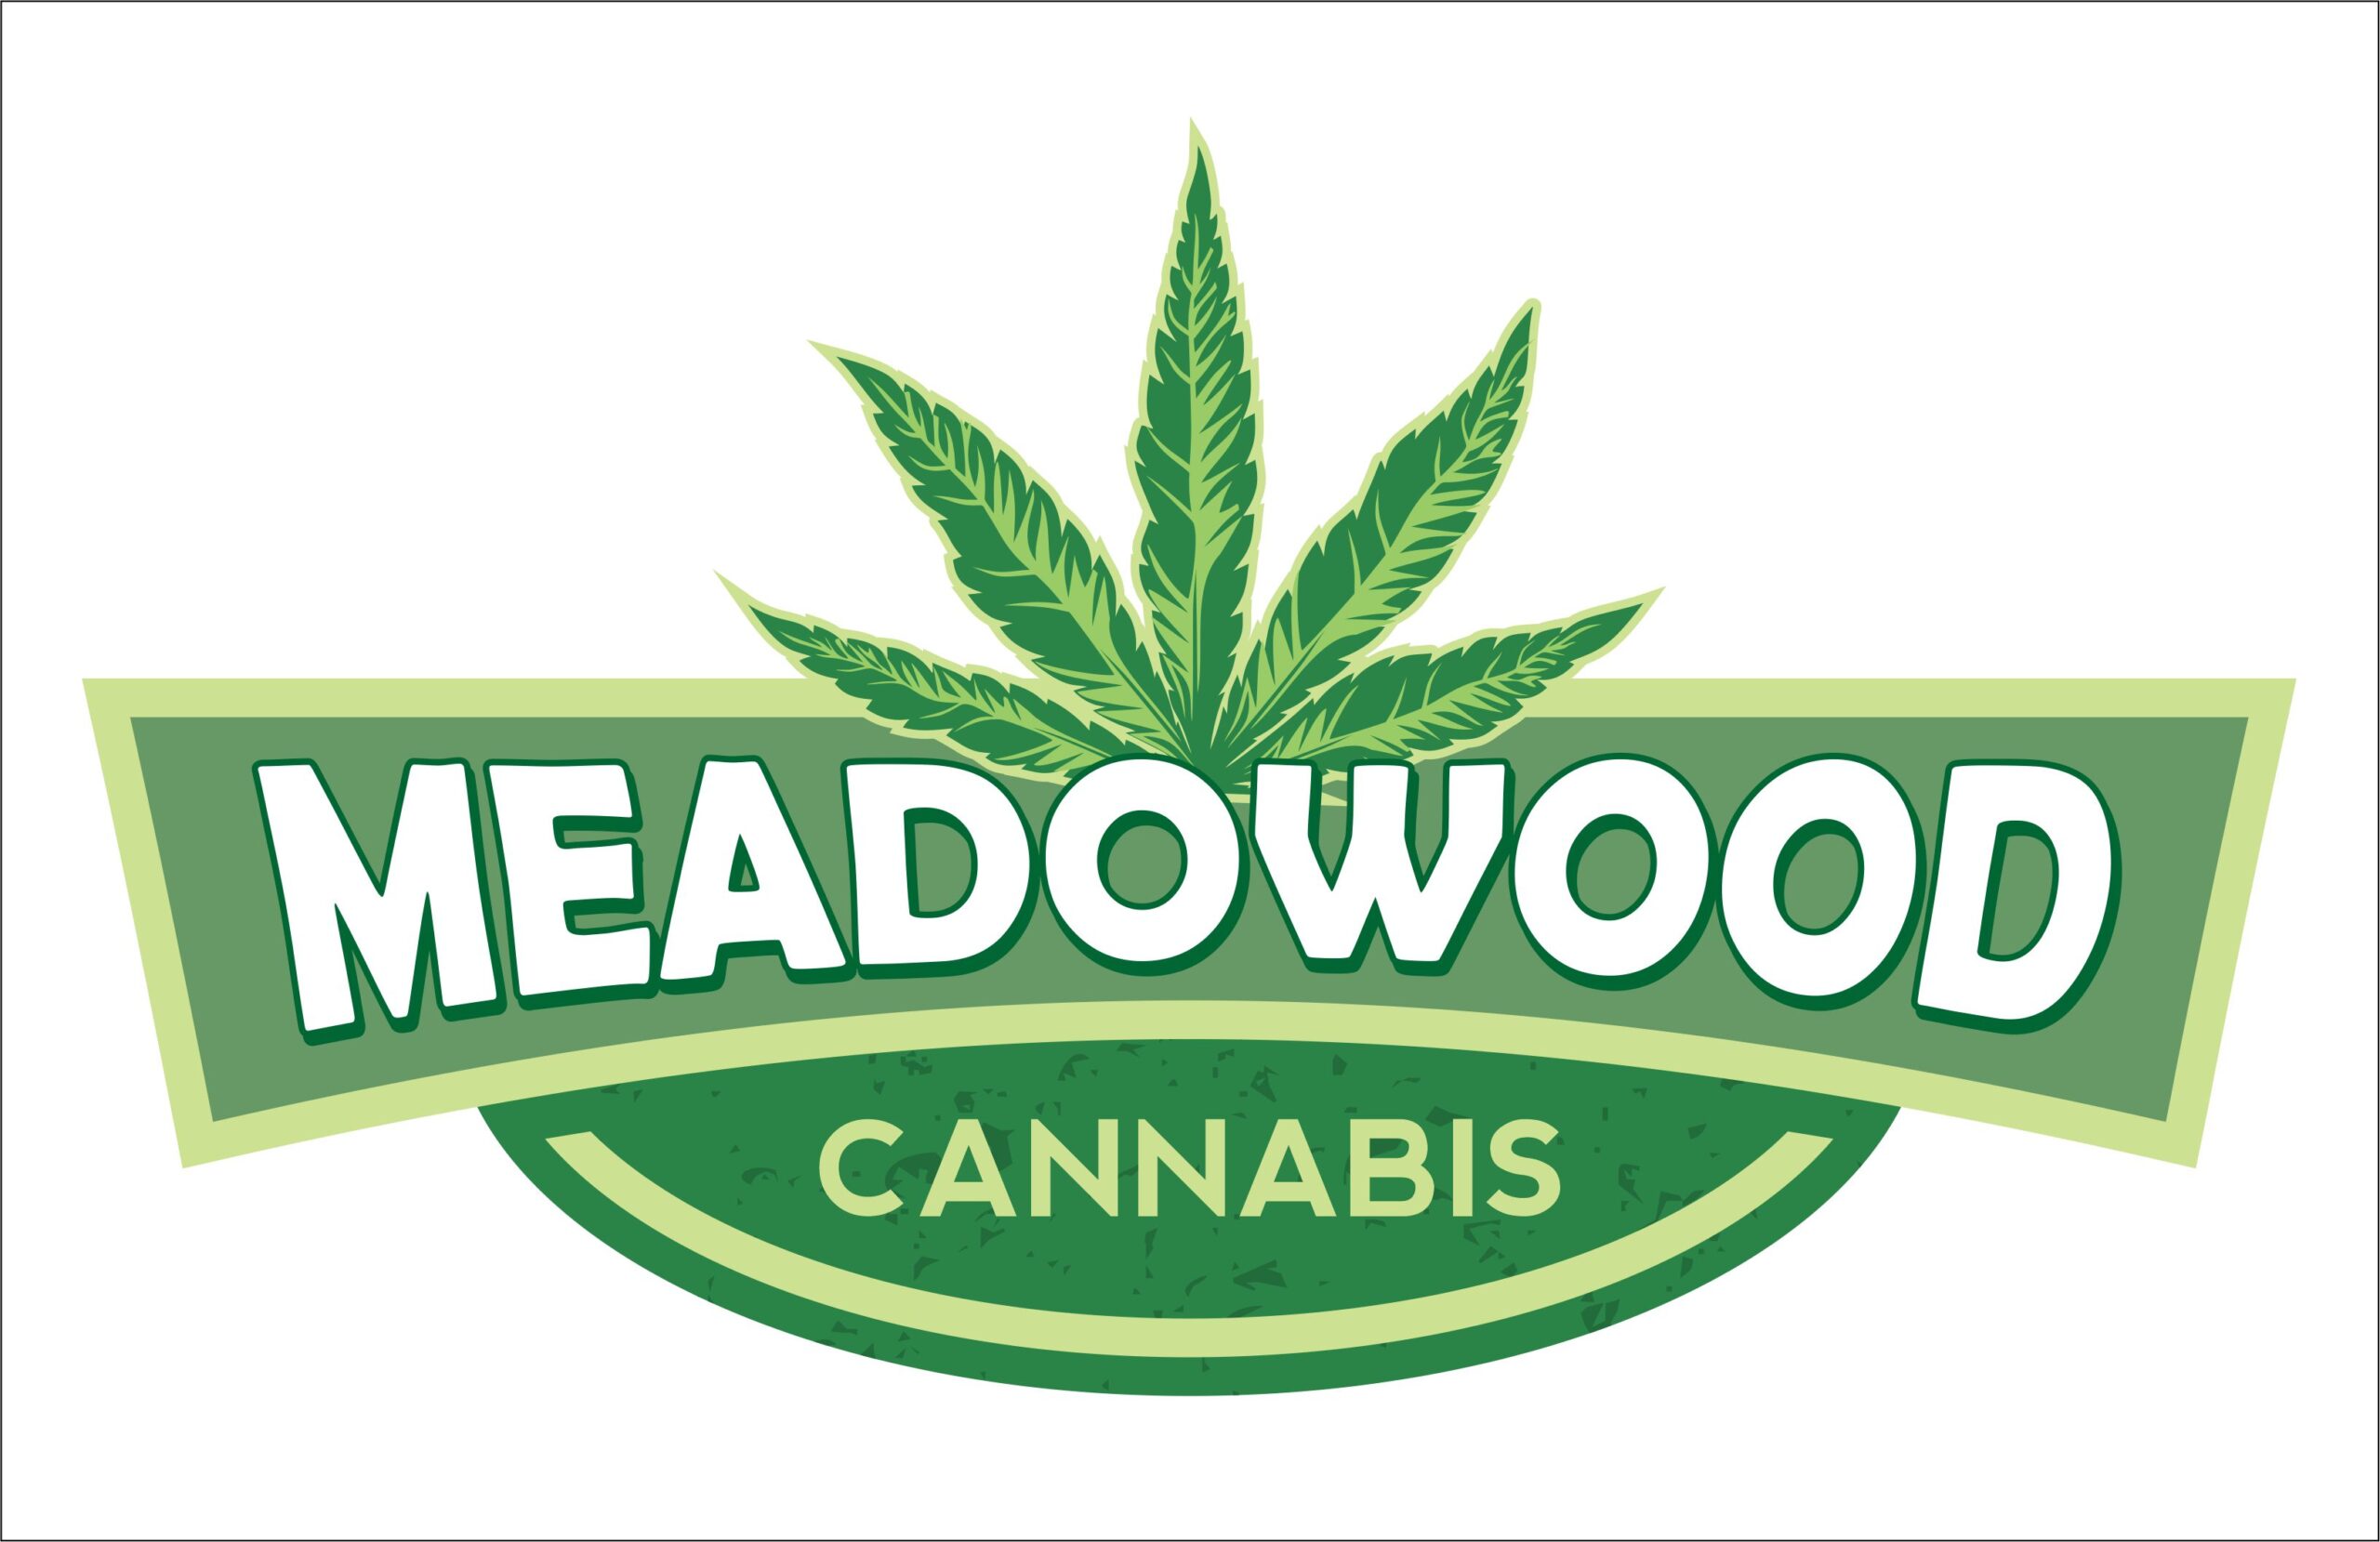 Meadowood Cannabis